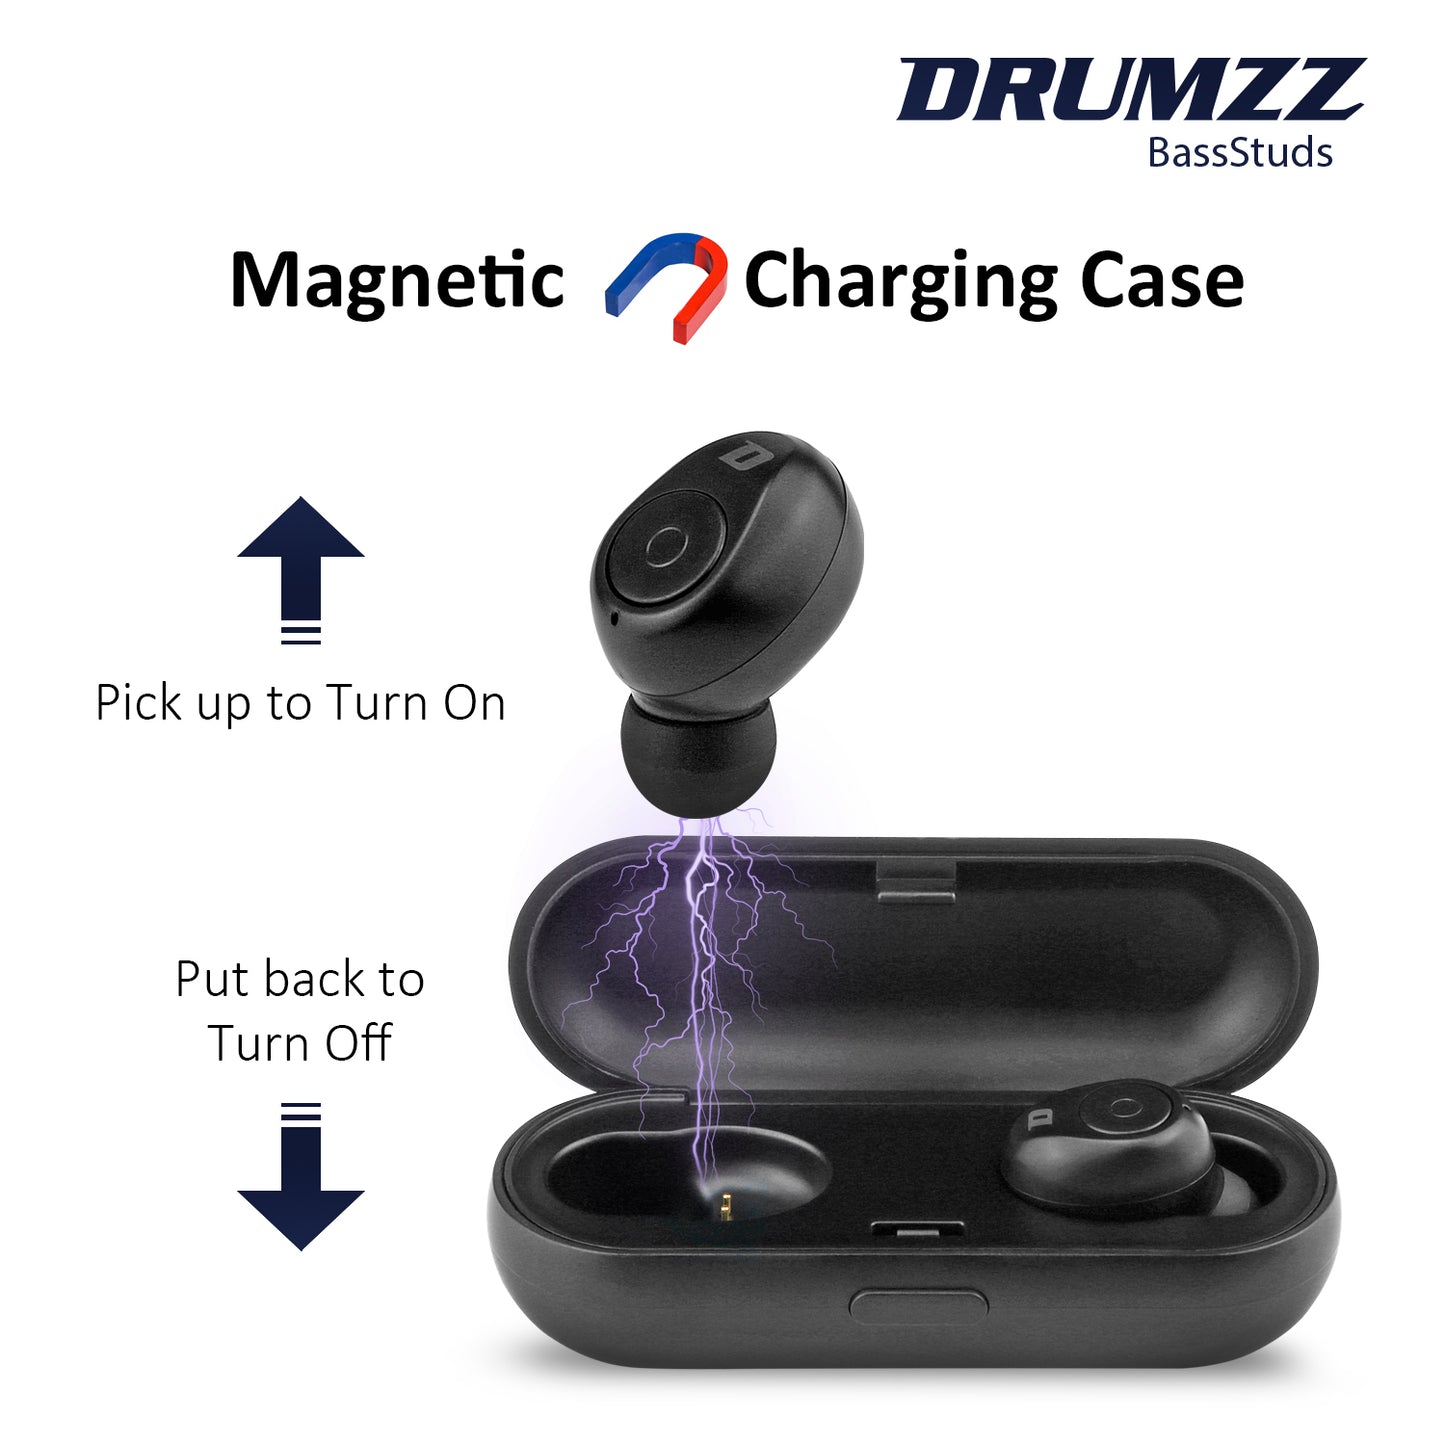 DRUMZZ TREK 200 - MULTIFUNCTIONAL HAND CRANK RADIO BLUETOOTH SPEAKER + BASSSTUDS EARBUDS